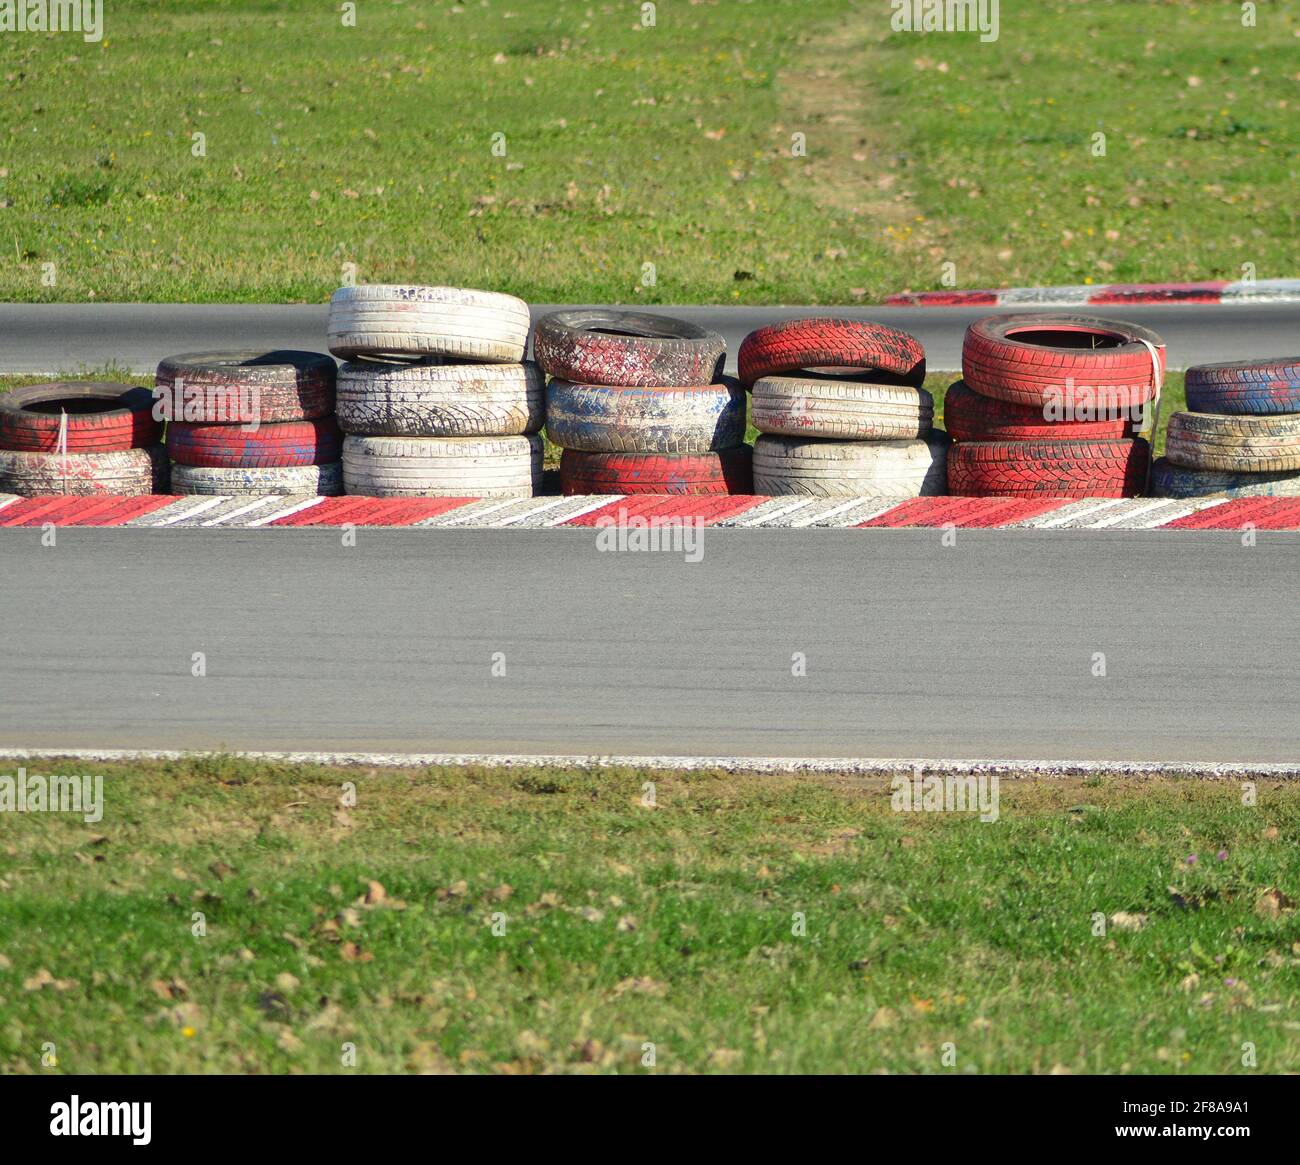 pneumatici vecchi come barriera di sicurezza Foto Stock